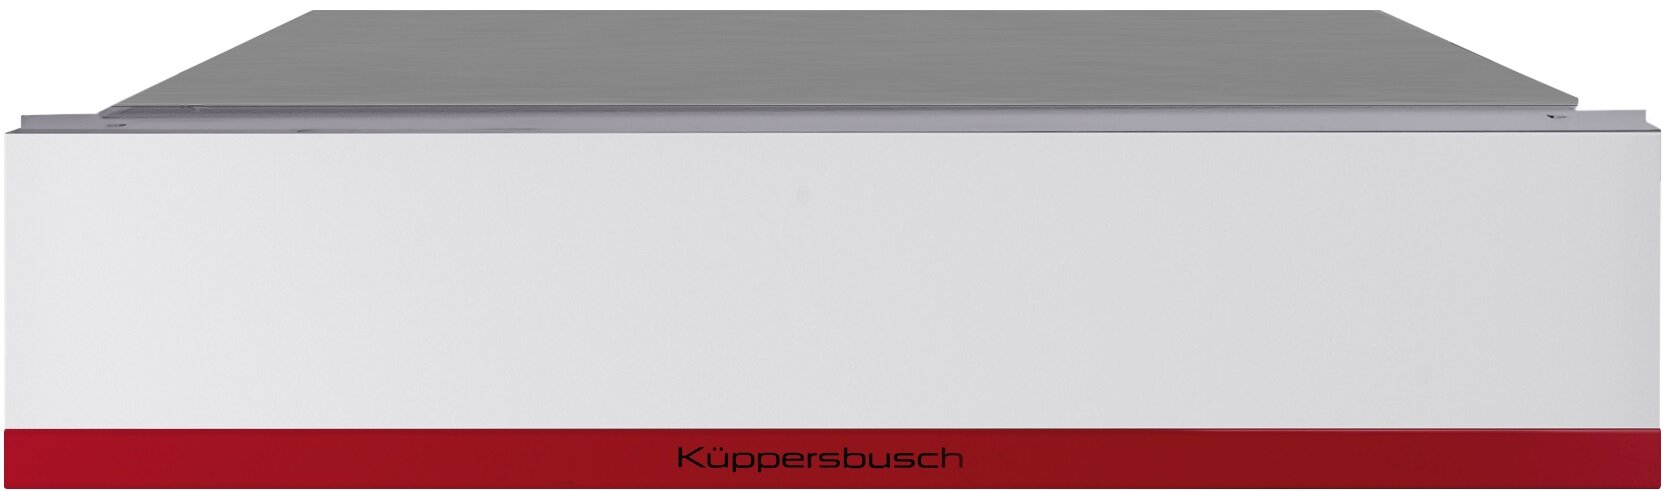 Вакууматор Kuppersbusch CSV 6800.0 W8